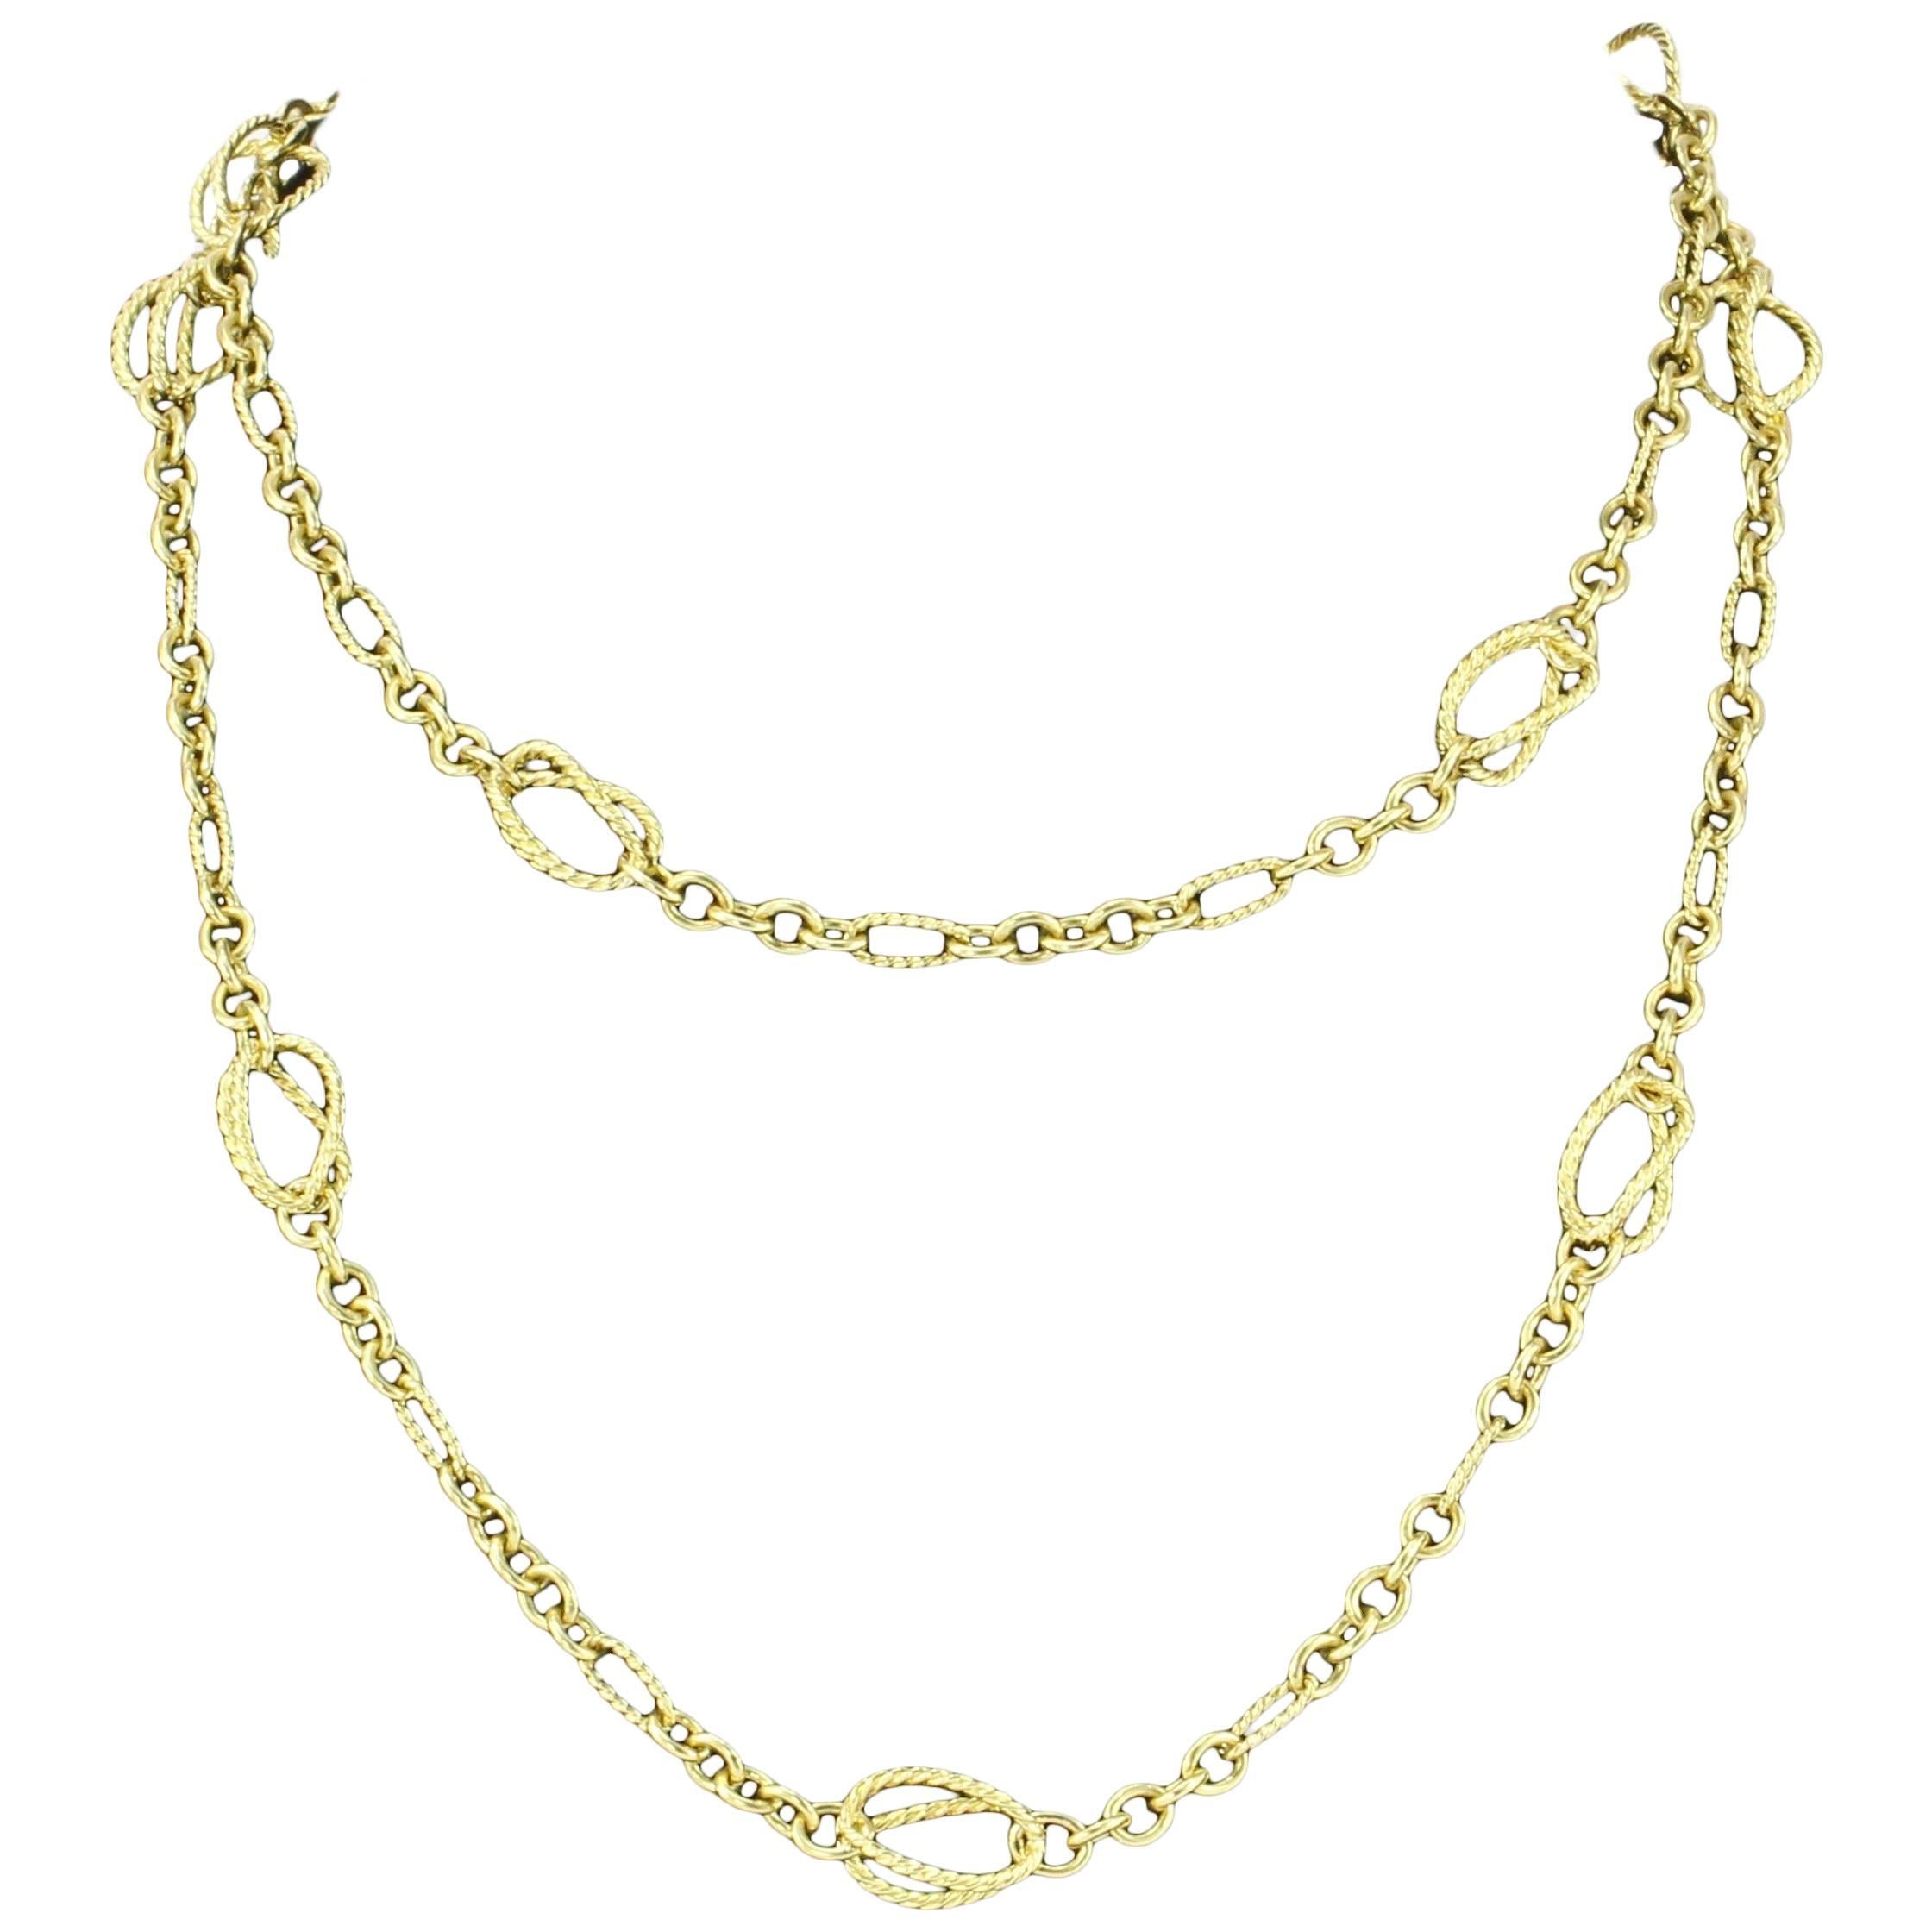 Rare David Yurman 18 Karat Yellow Gold Spiral Link Necklace